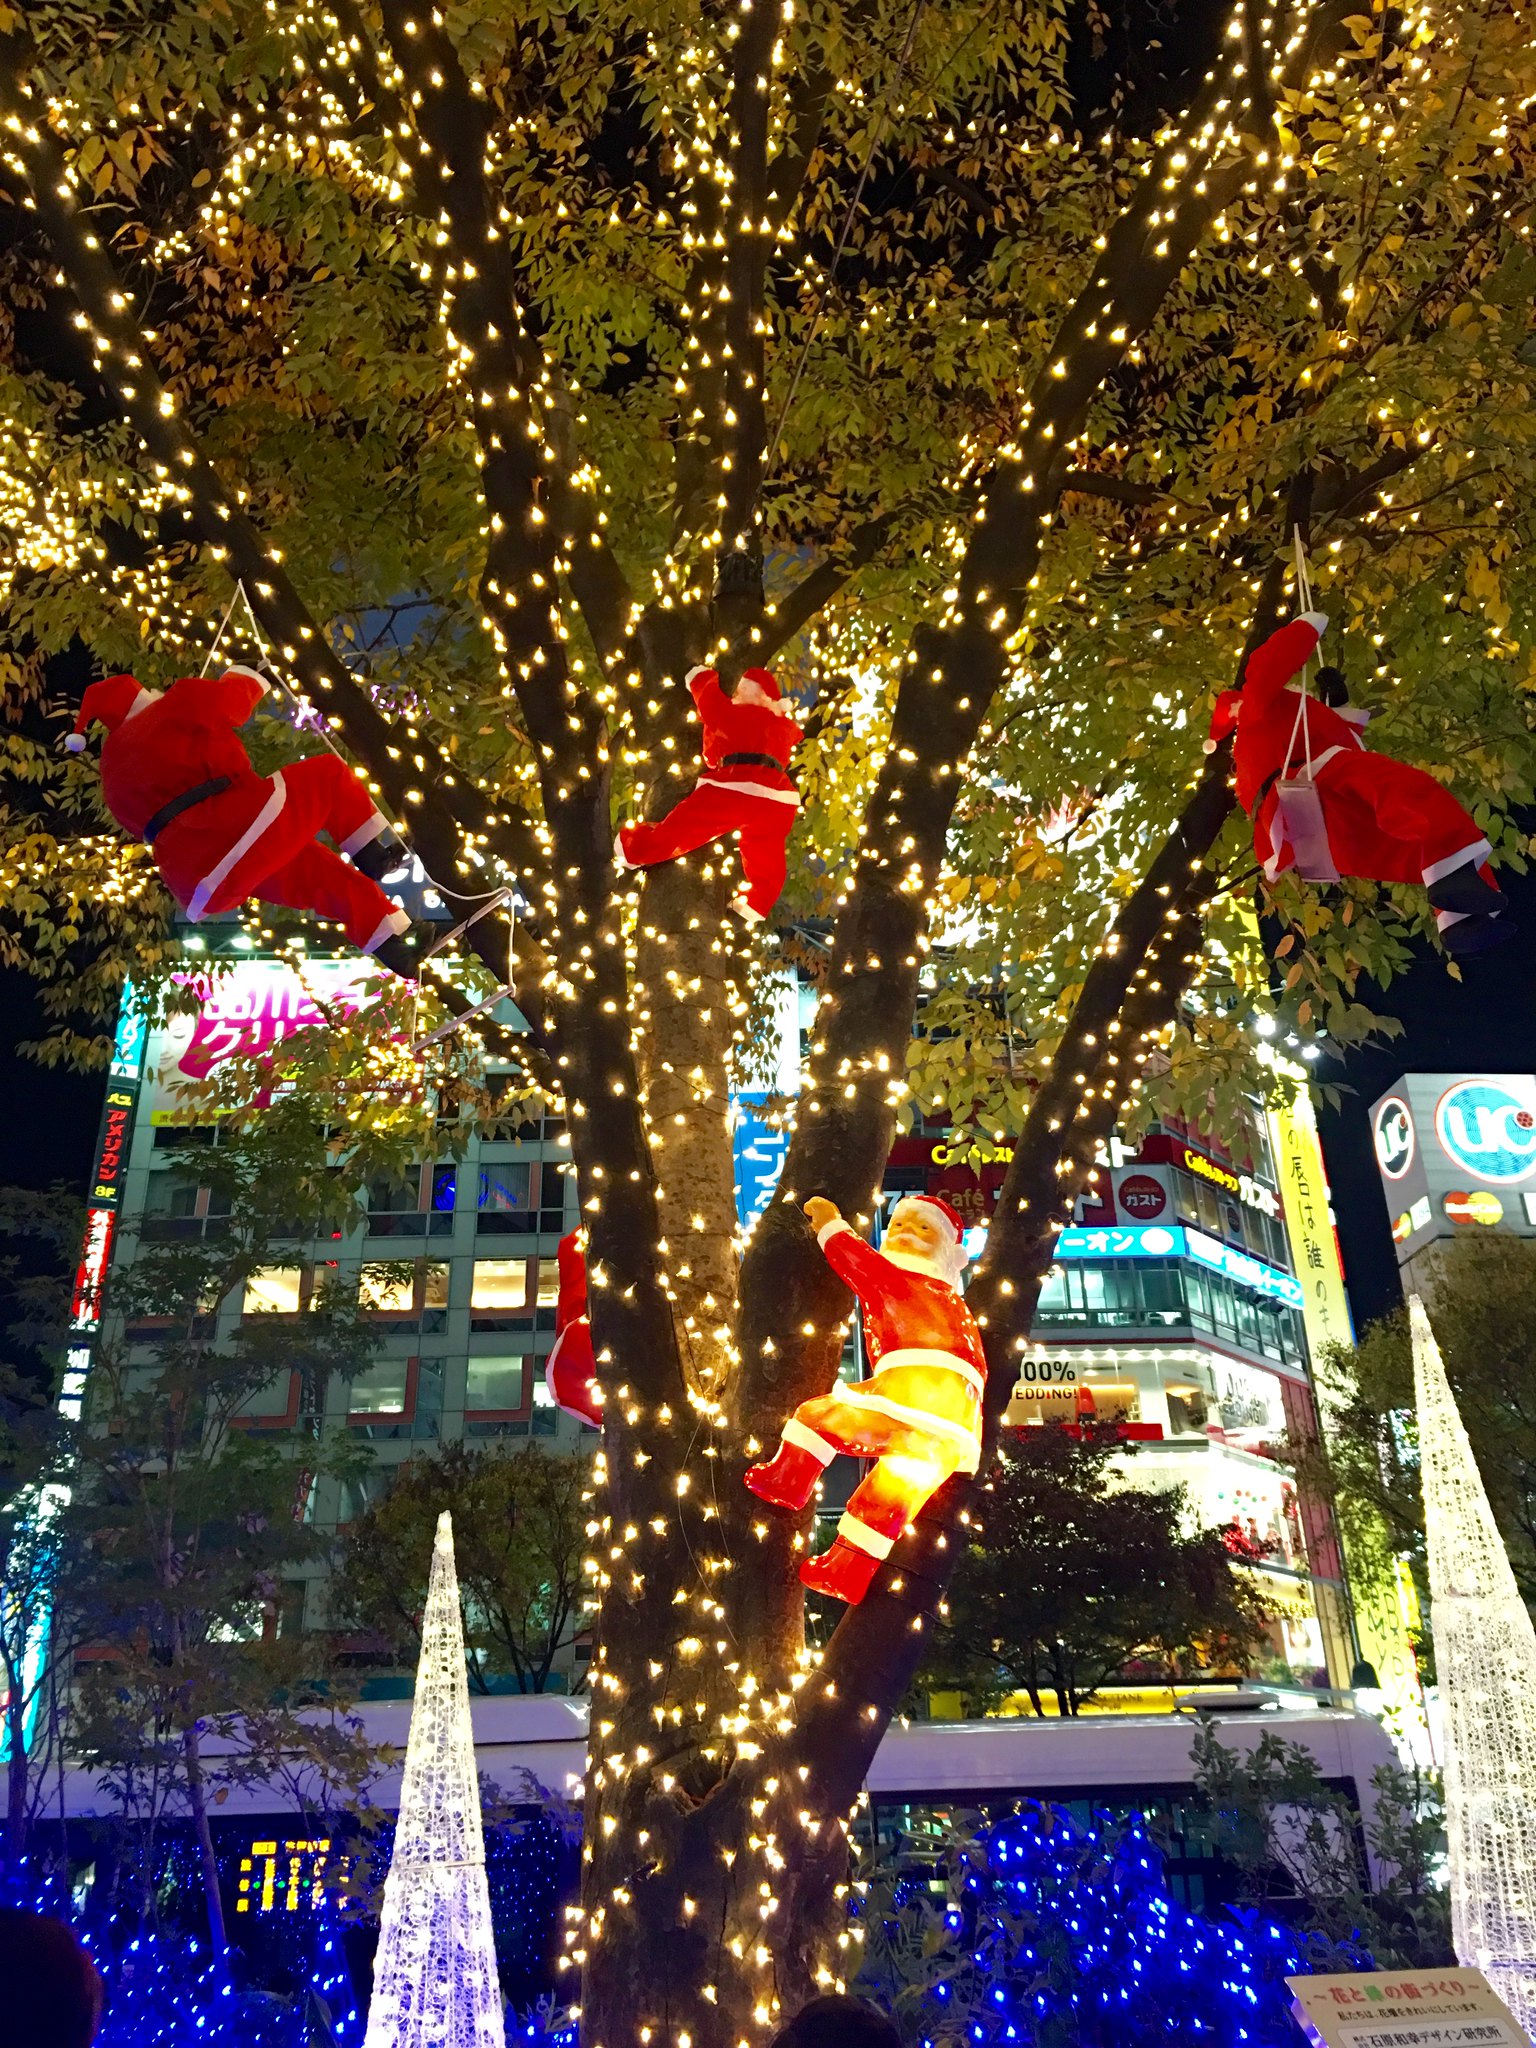 Hachiko and Christmas illumination